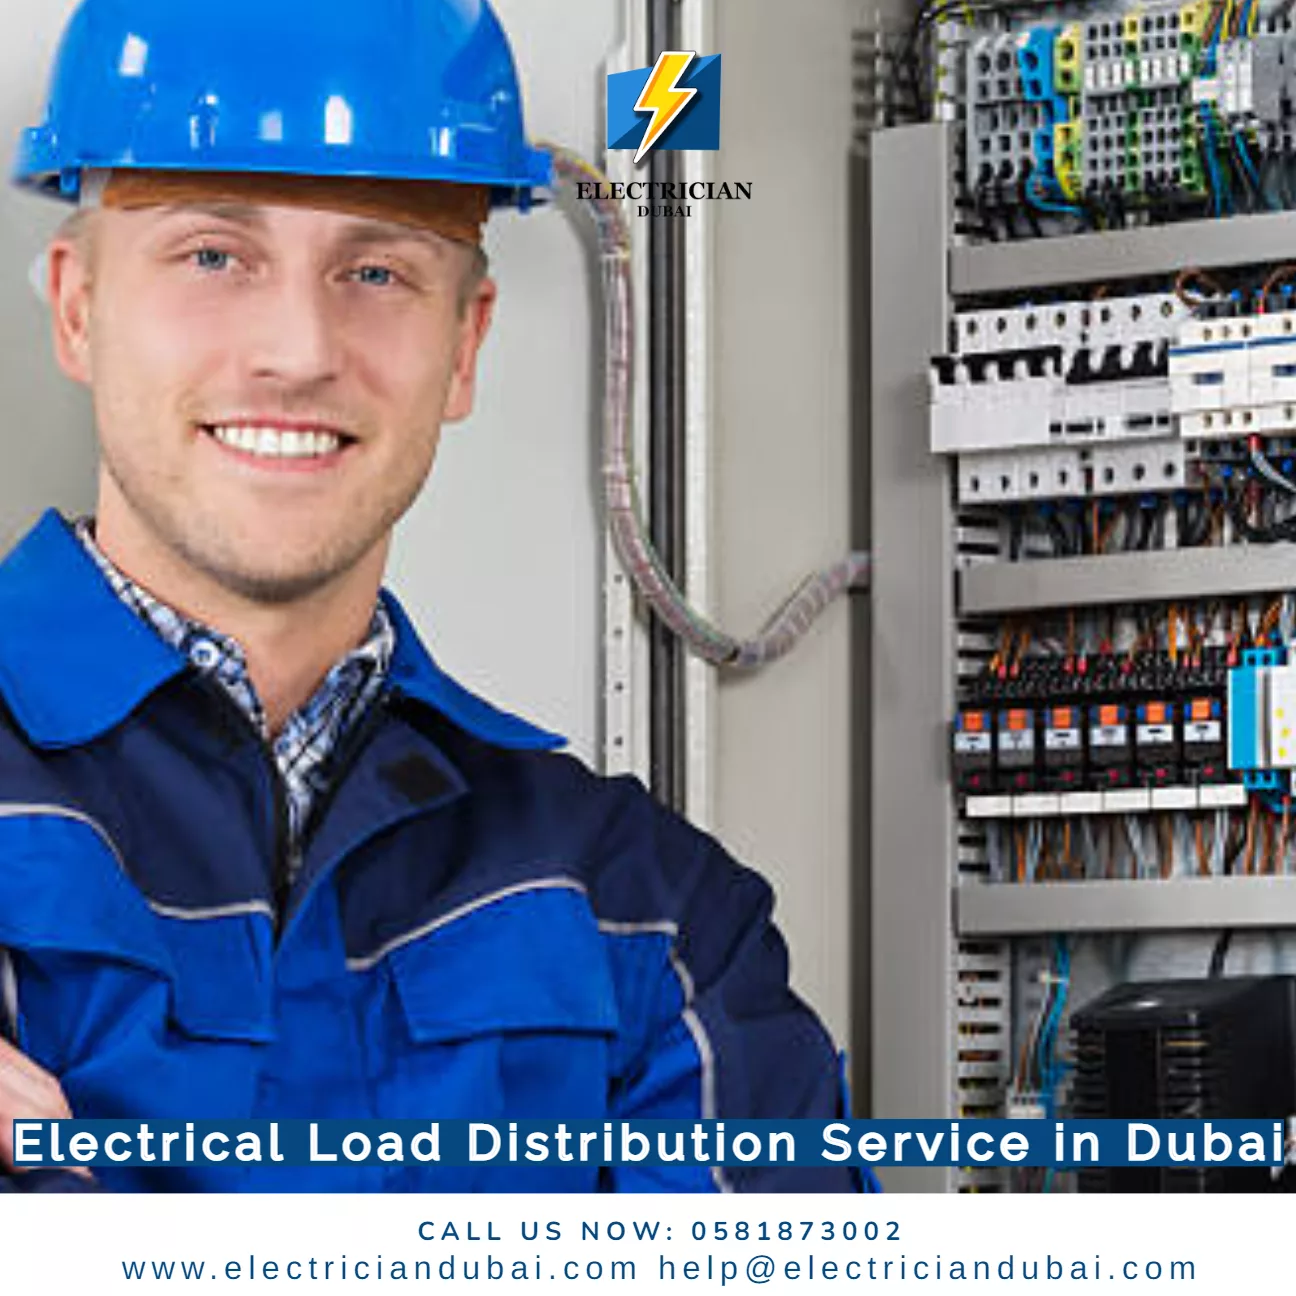 Electrical Load Distribution Service in Dubai